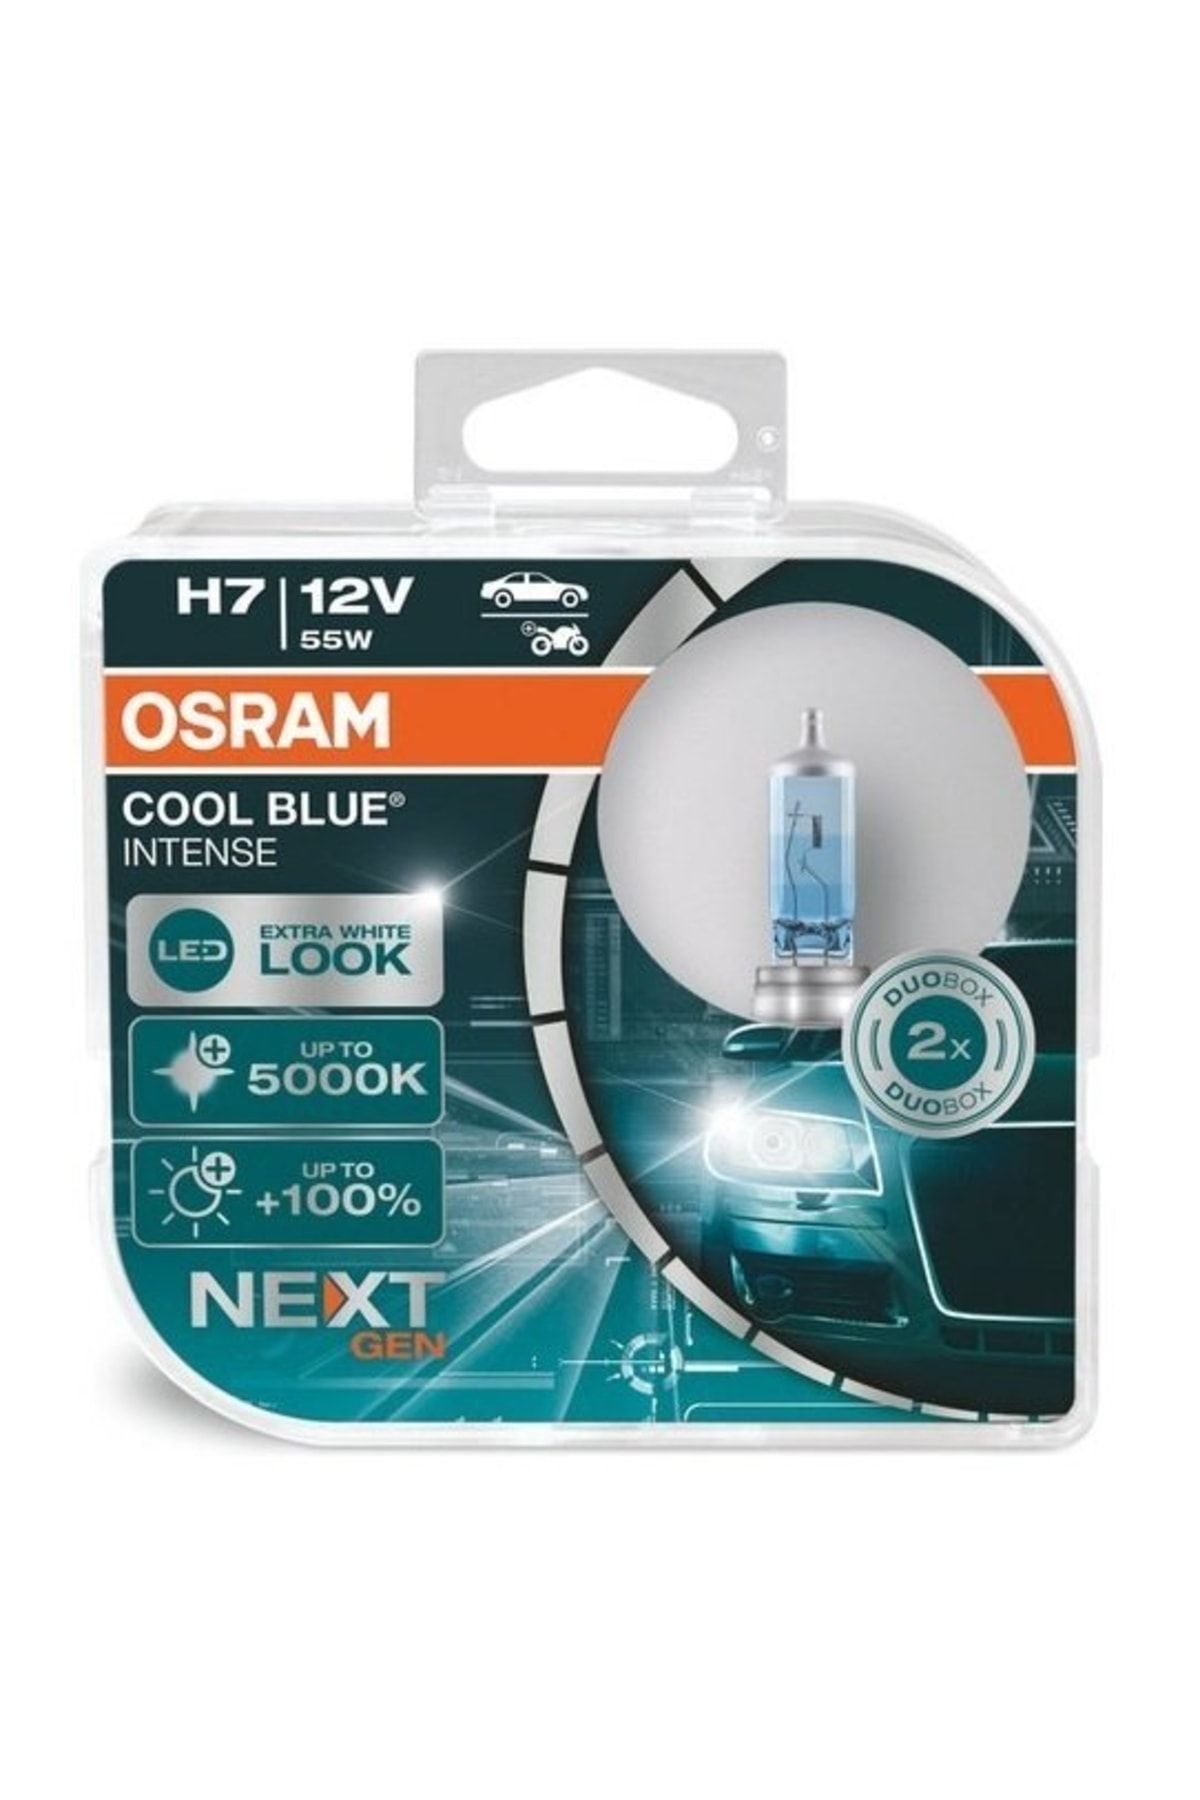 Osram Next Generation H7 Cool Blue Intense Beyaz 5000k 12v 55w 2'li Ampul  Set Fiyatı, Yorumları - Trendyol